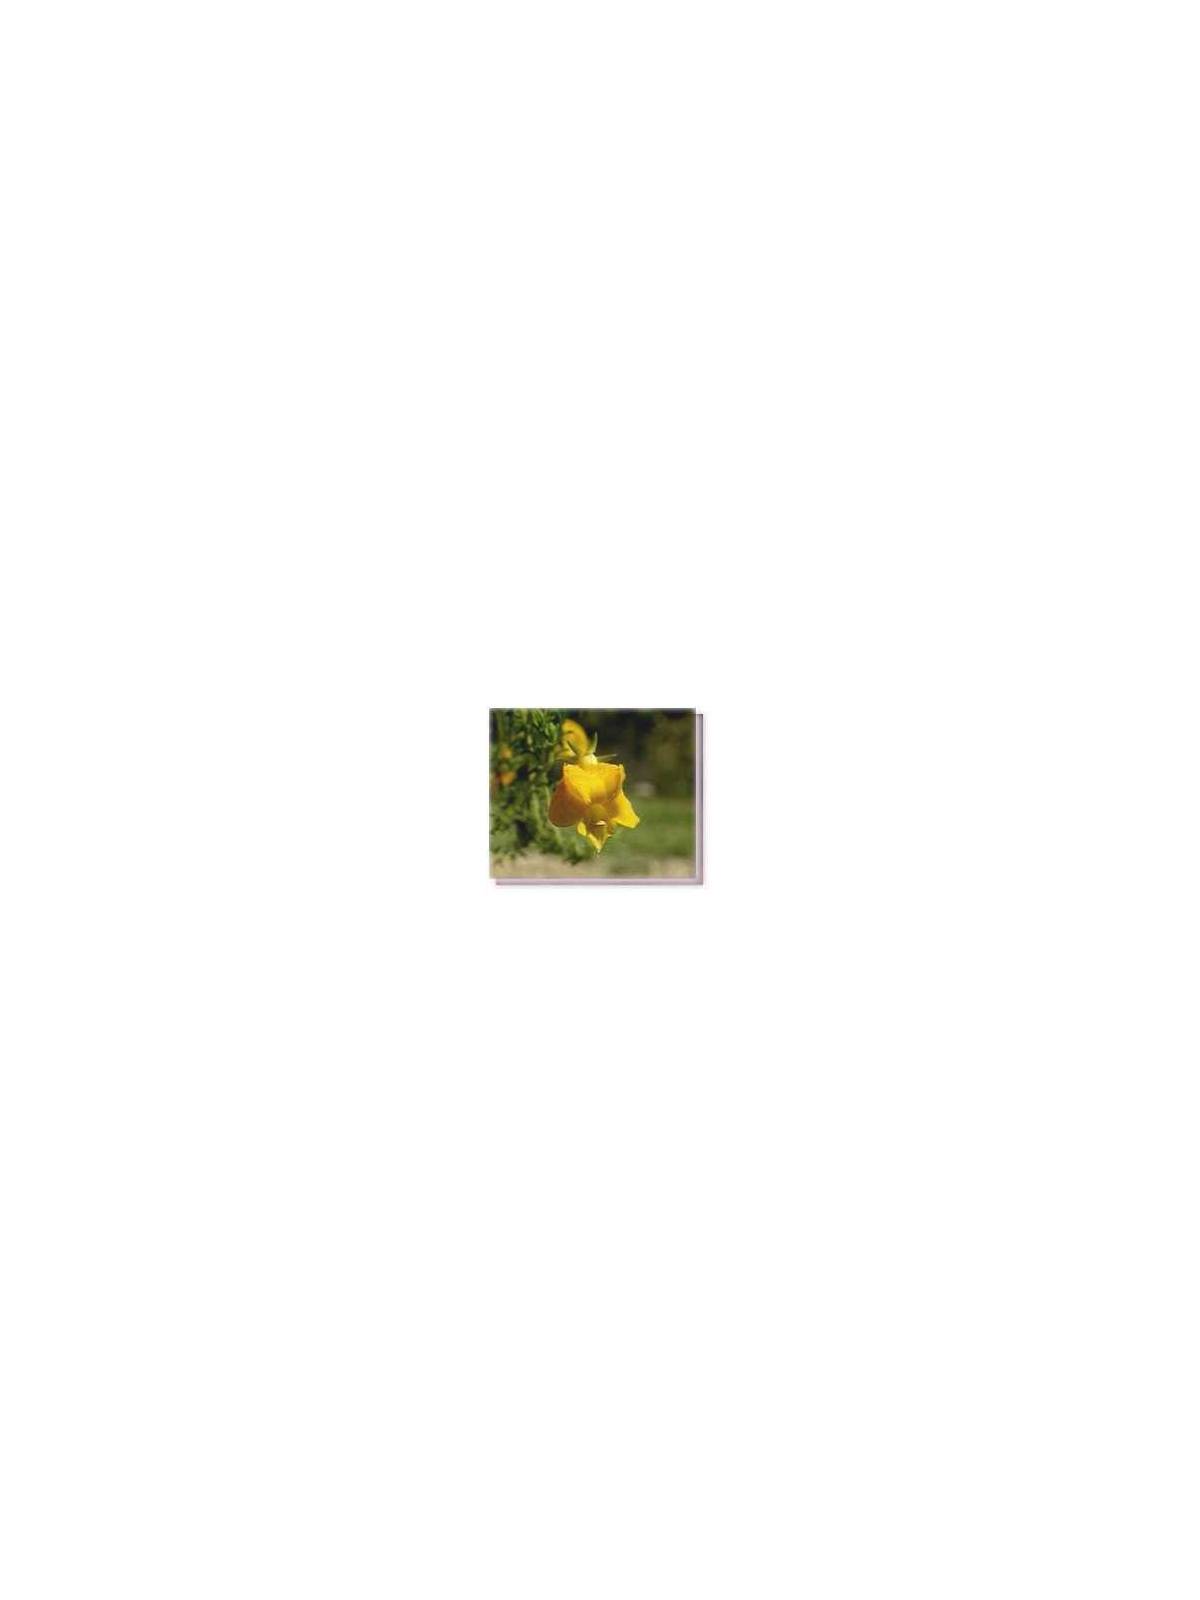 Fiore Yellow Leschenaultia Living Essences